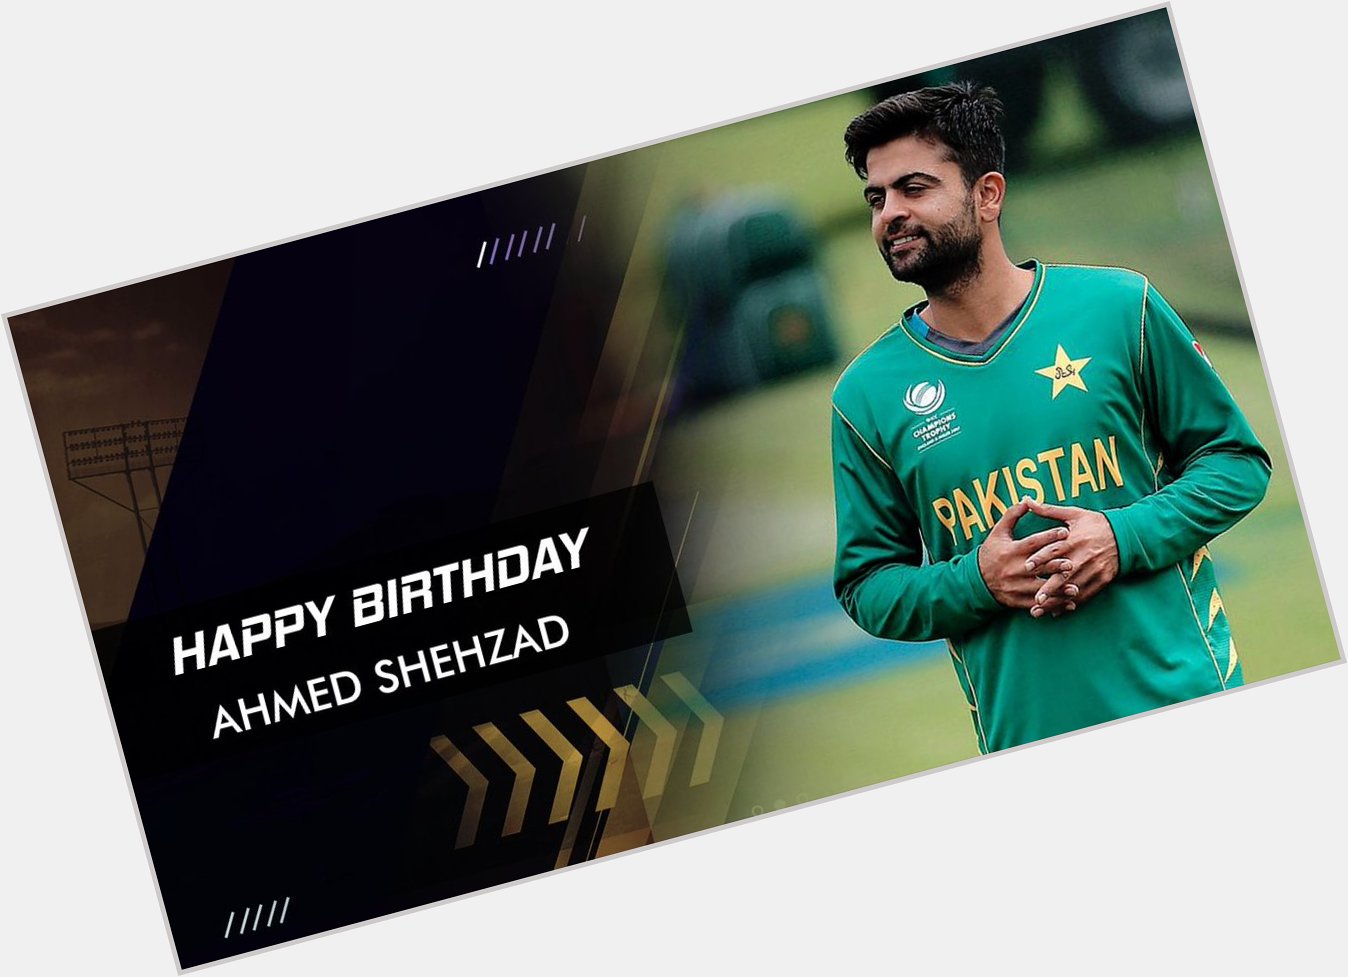 Happy Birthday!! Ahmed Shehzad

An opening batsman for Pakistan 